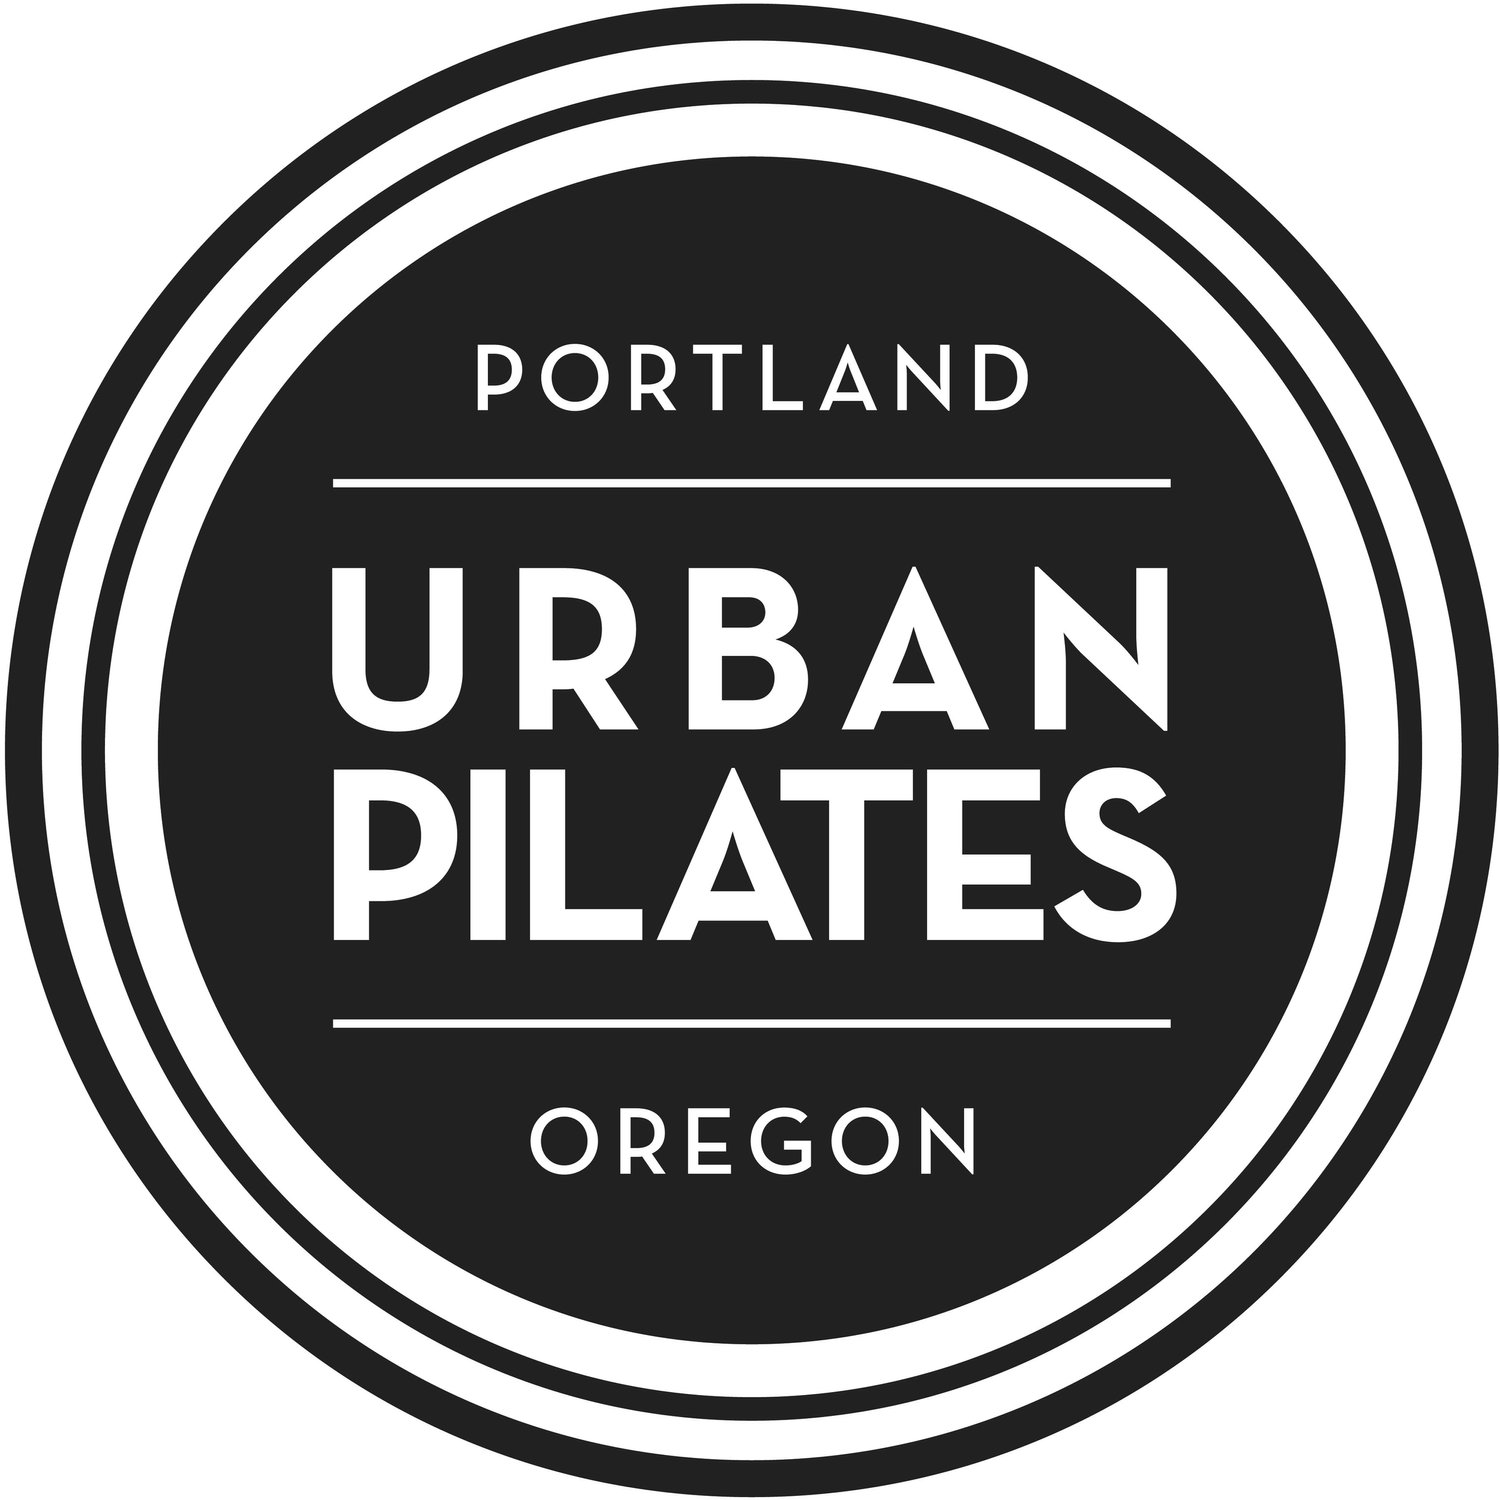 Urban Pilates